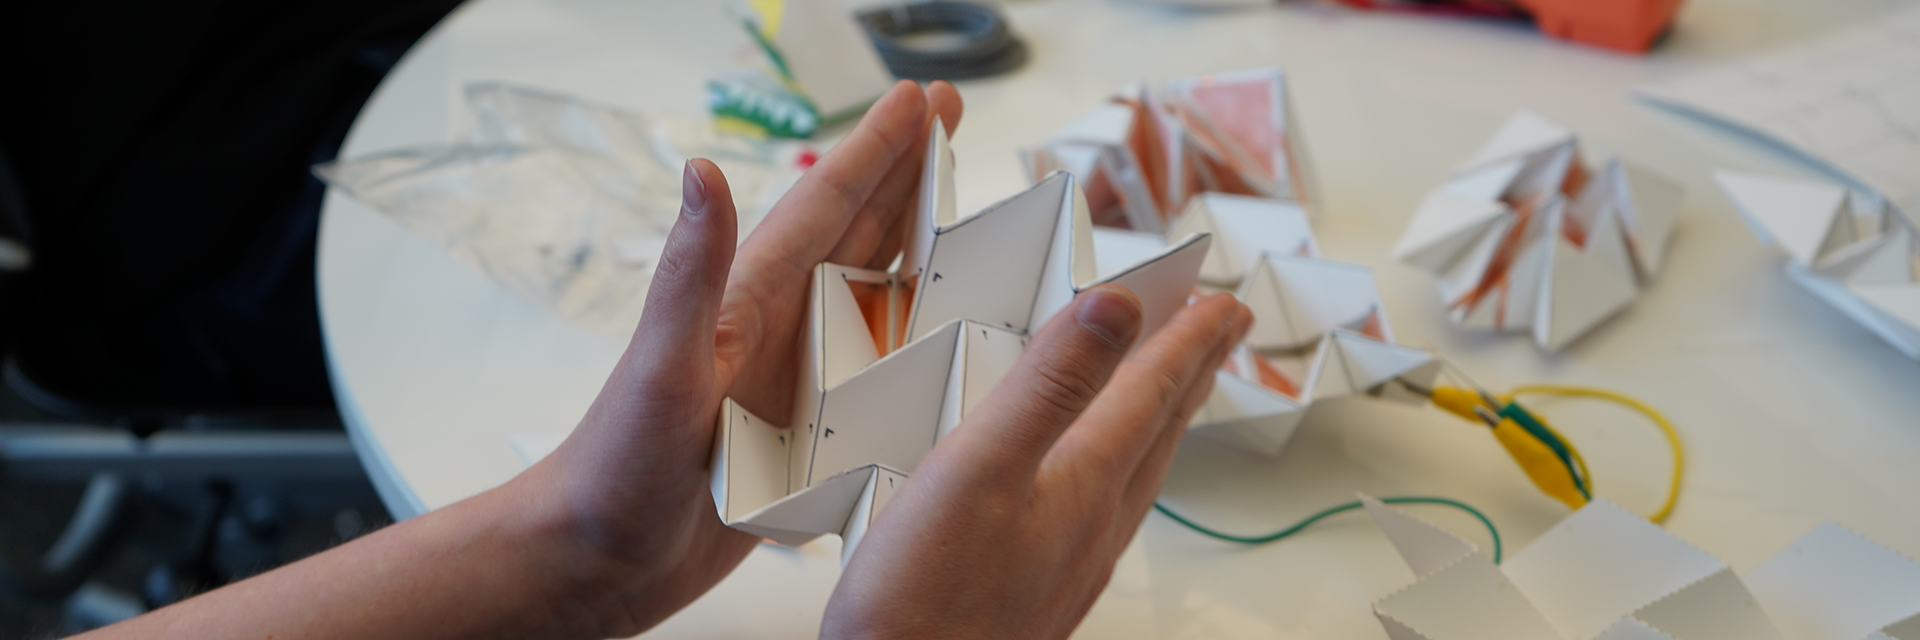 Hands squeezing power generating origami. 